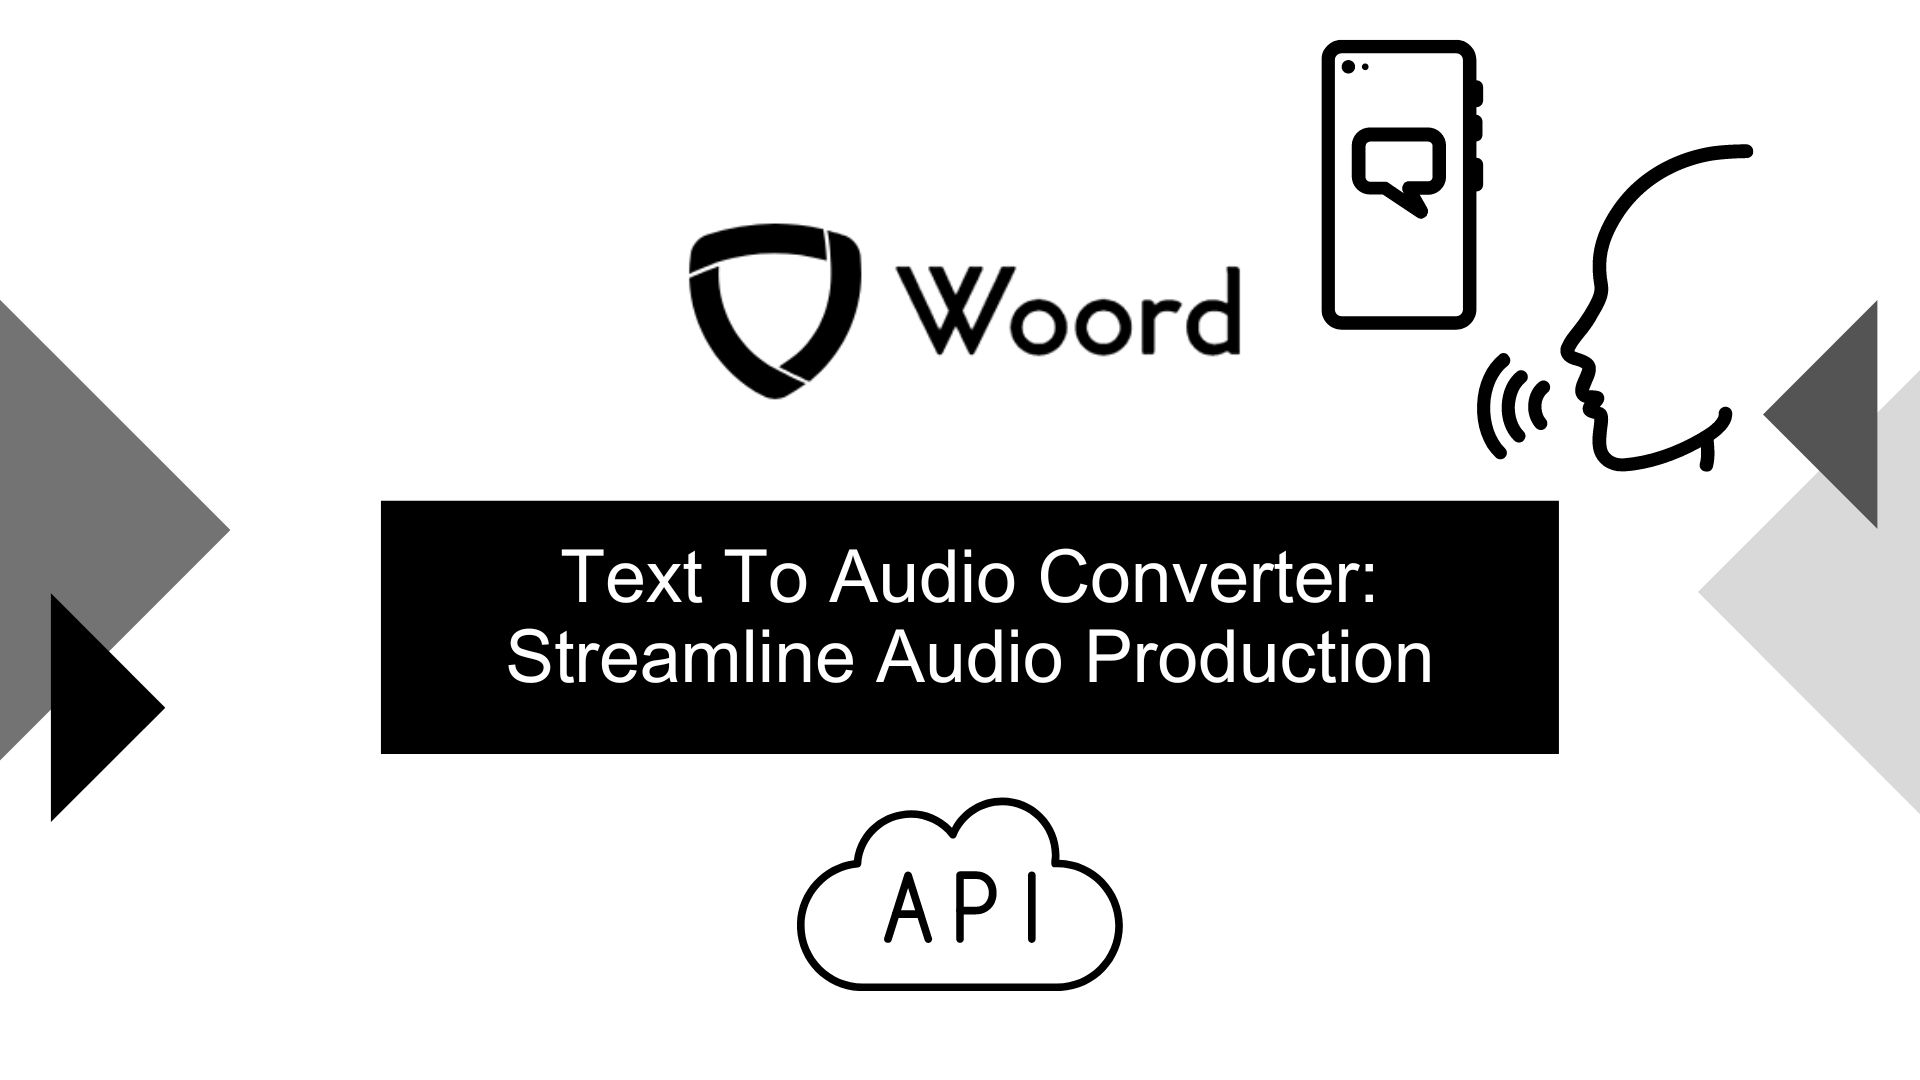 Text To Audio Converter: Streamline Audio Production